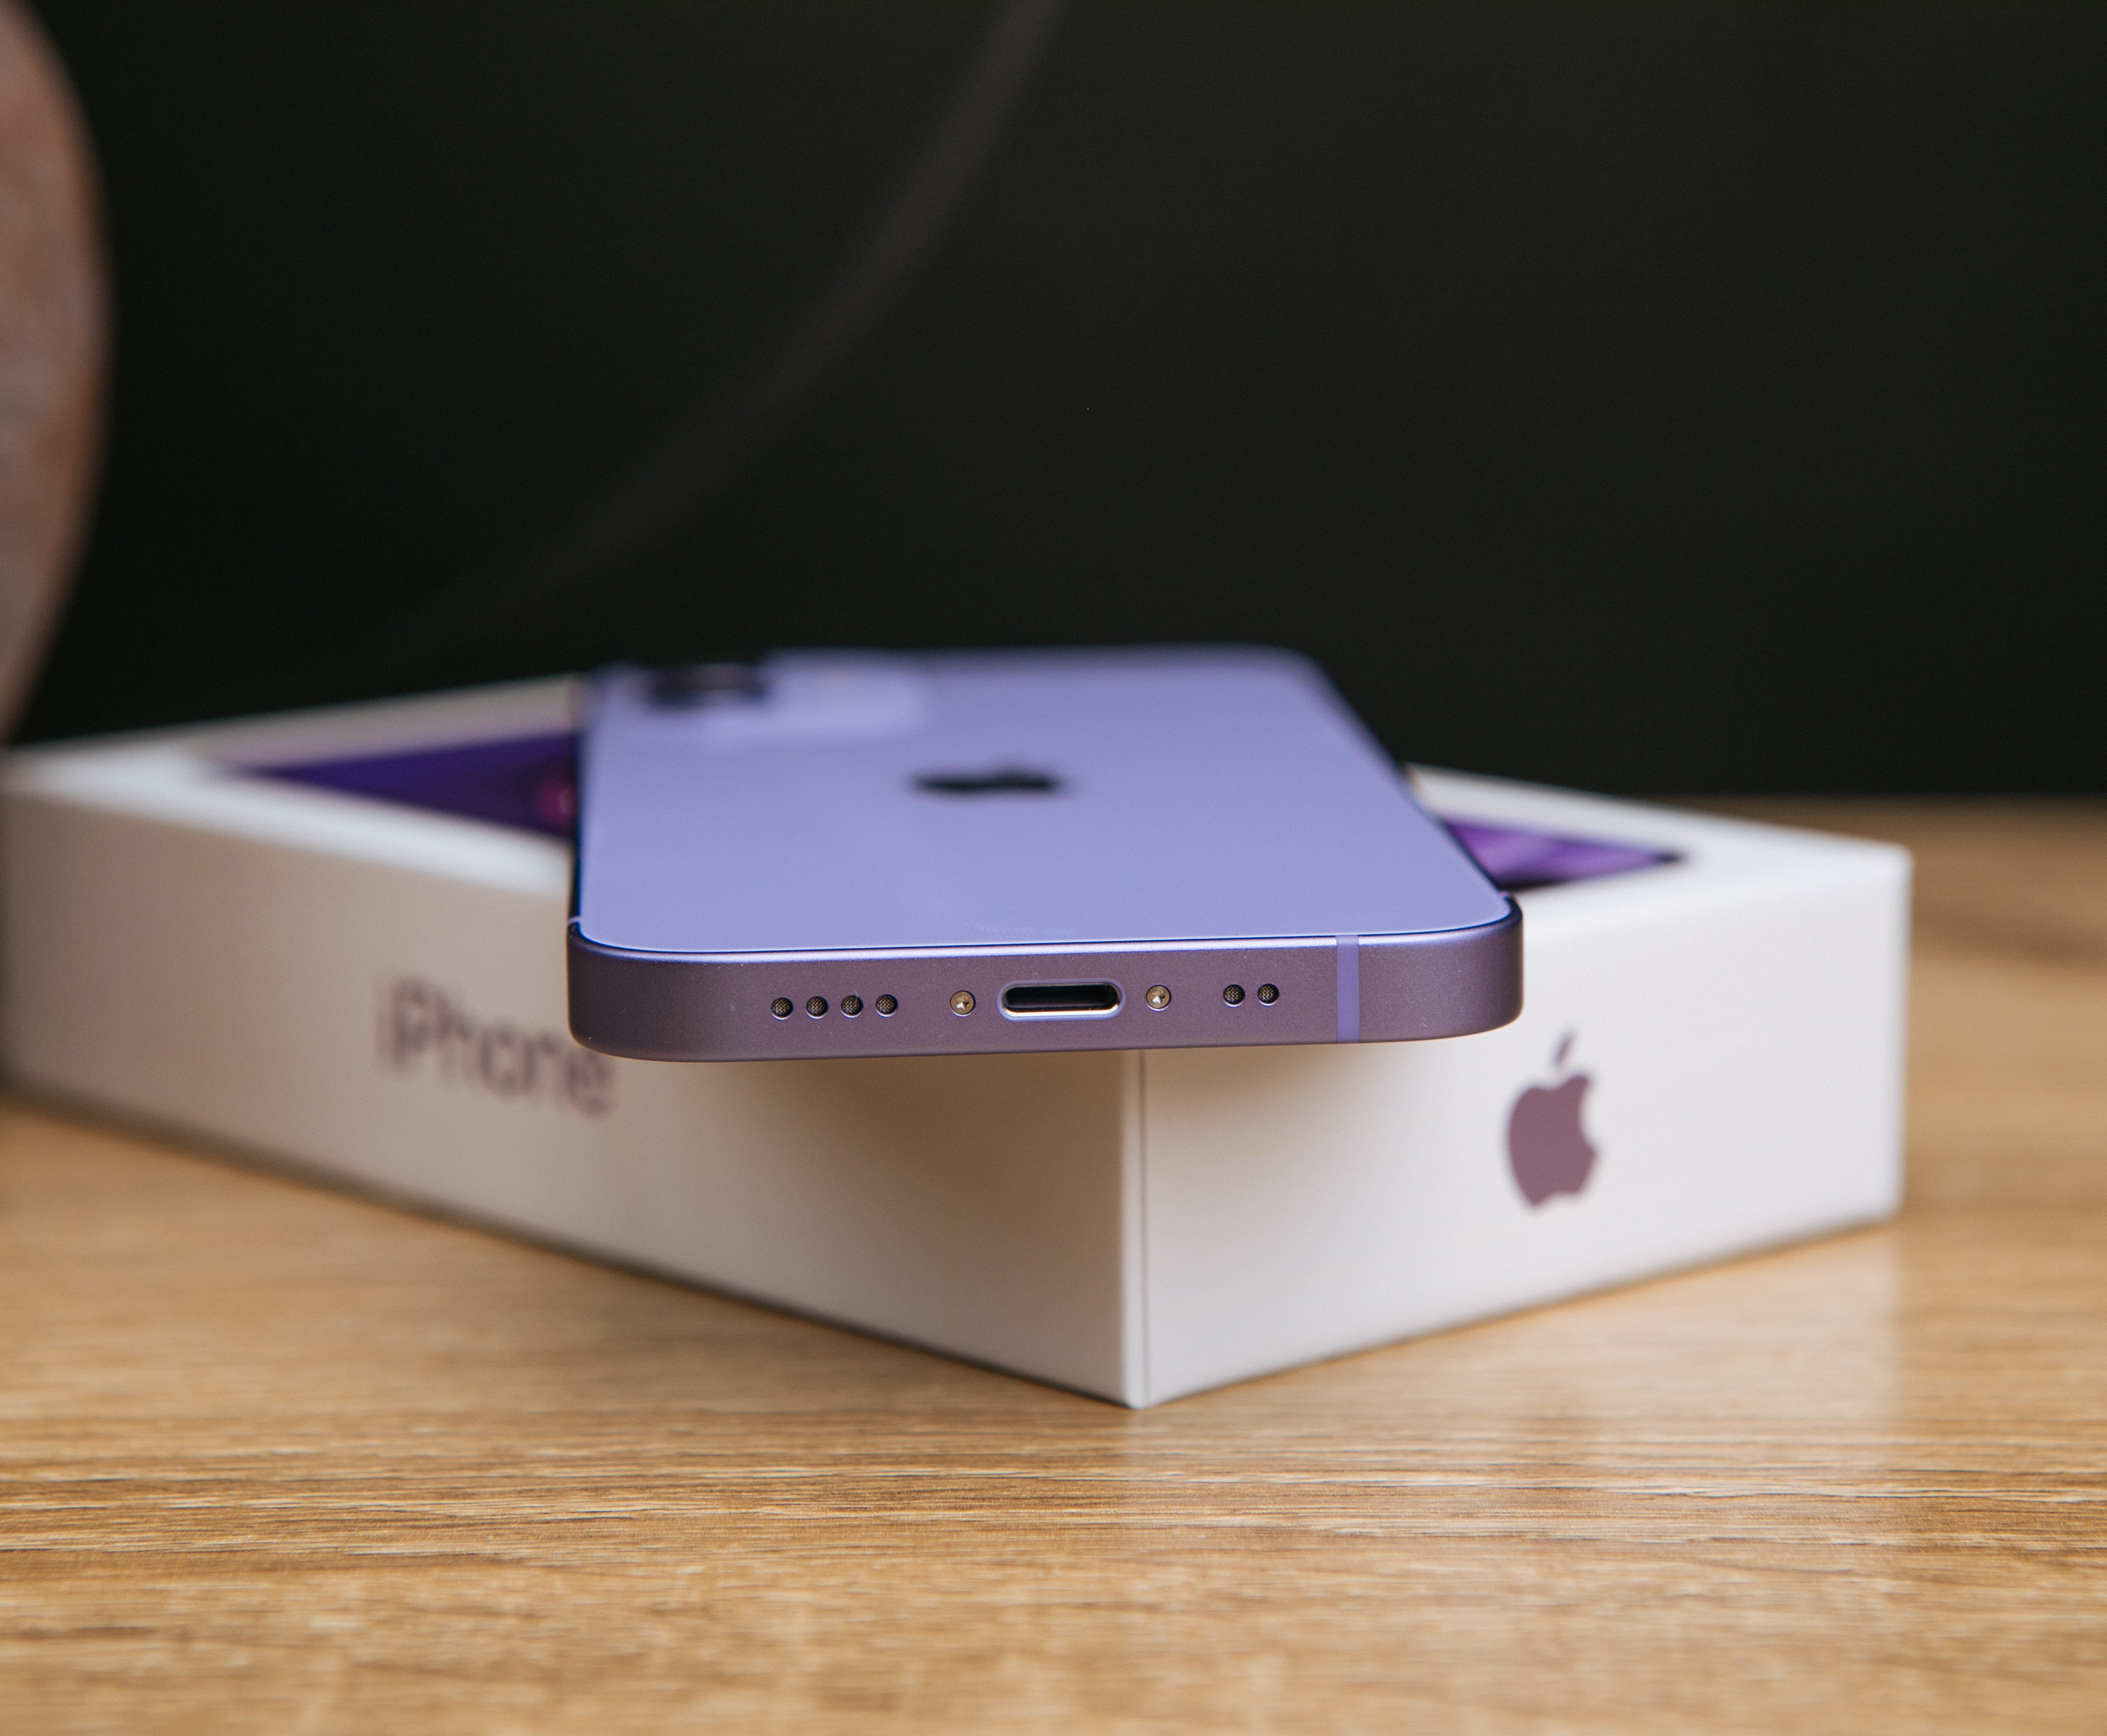 iPhone 12 Mini 256gb, Purple (MJQH3) б/у